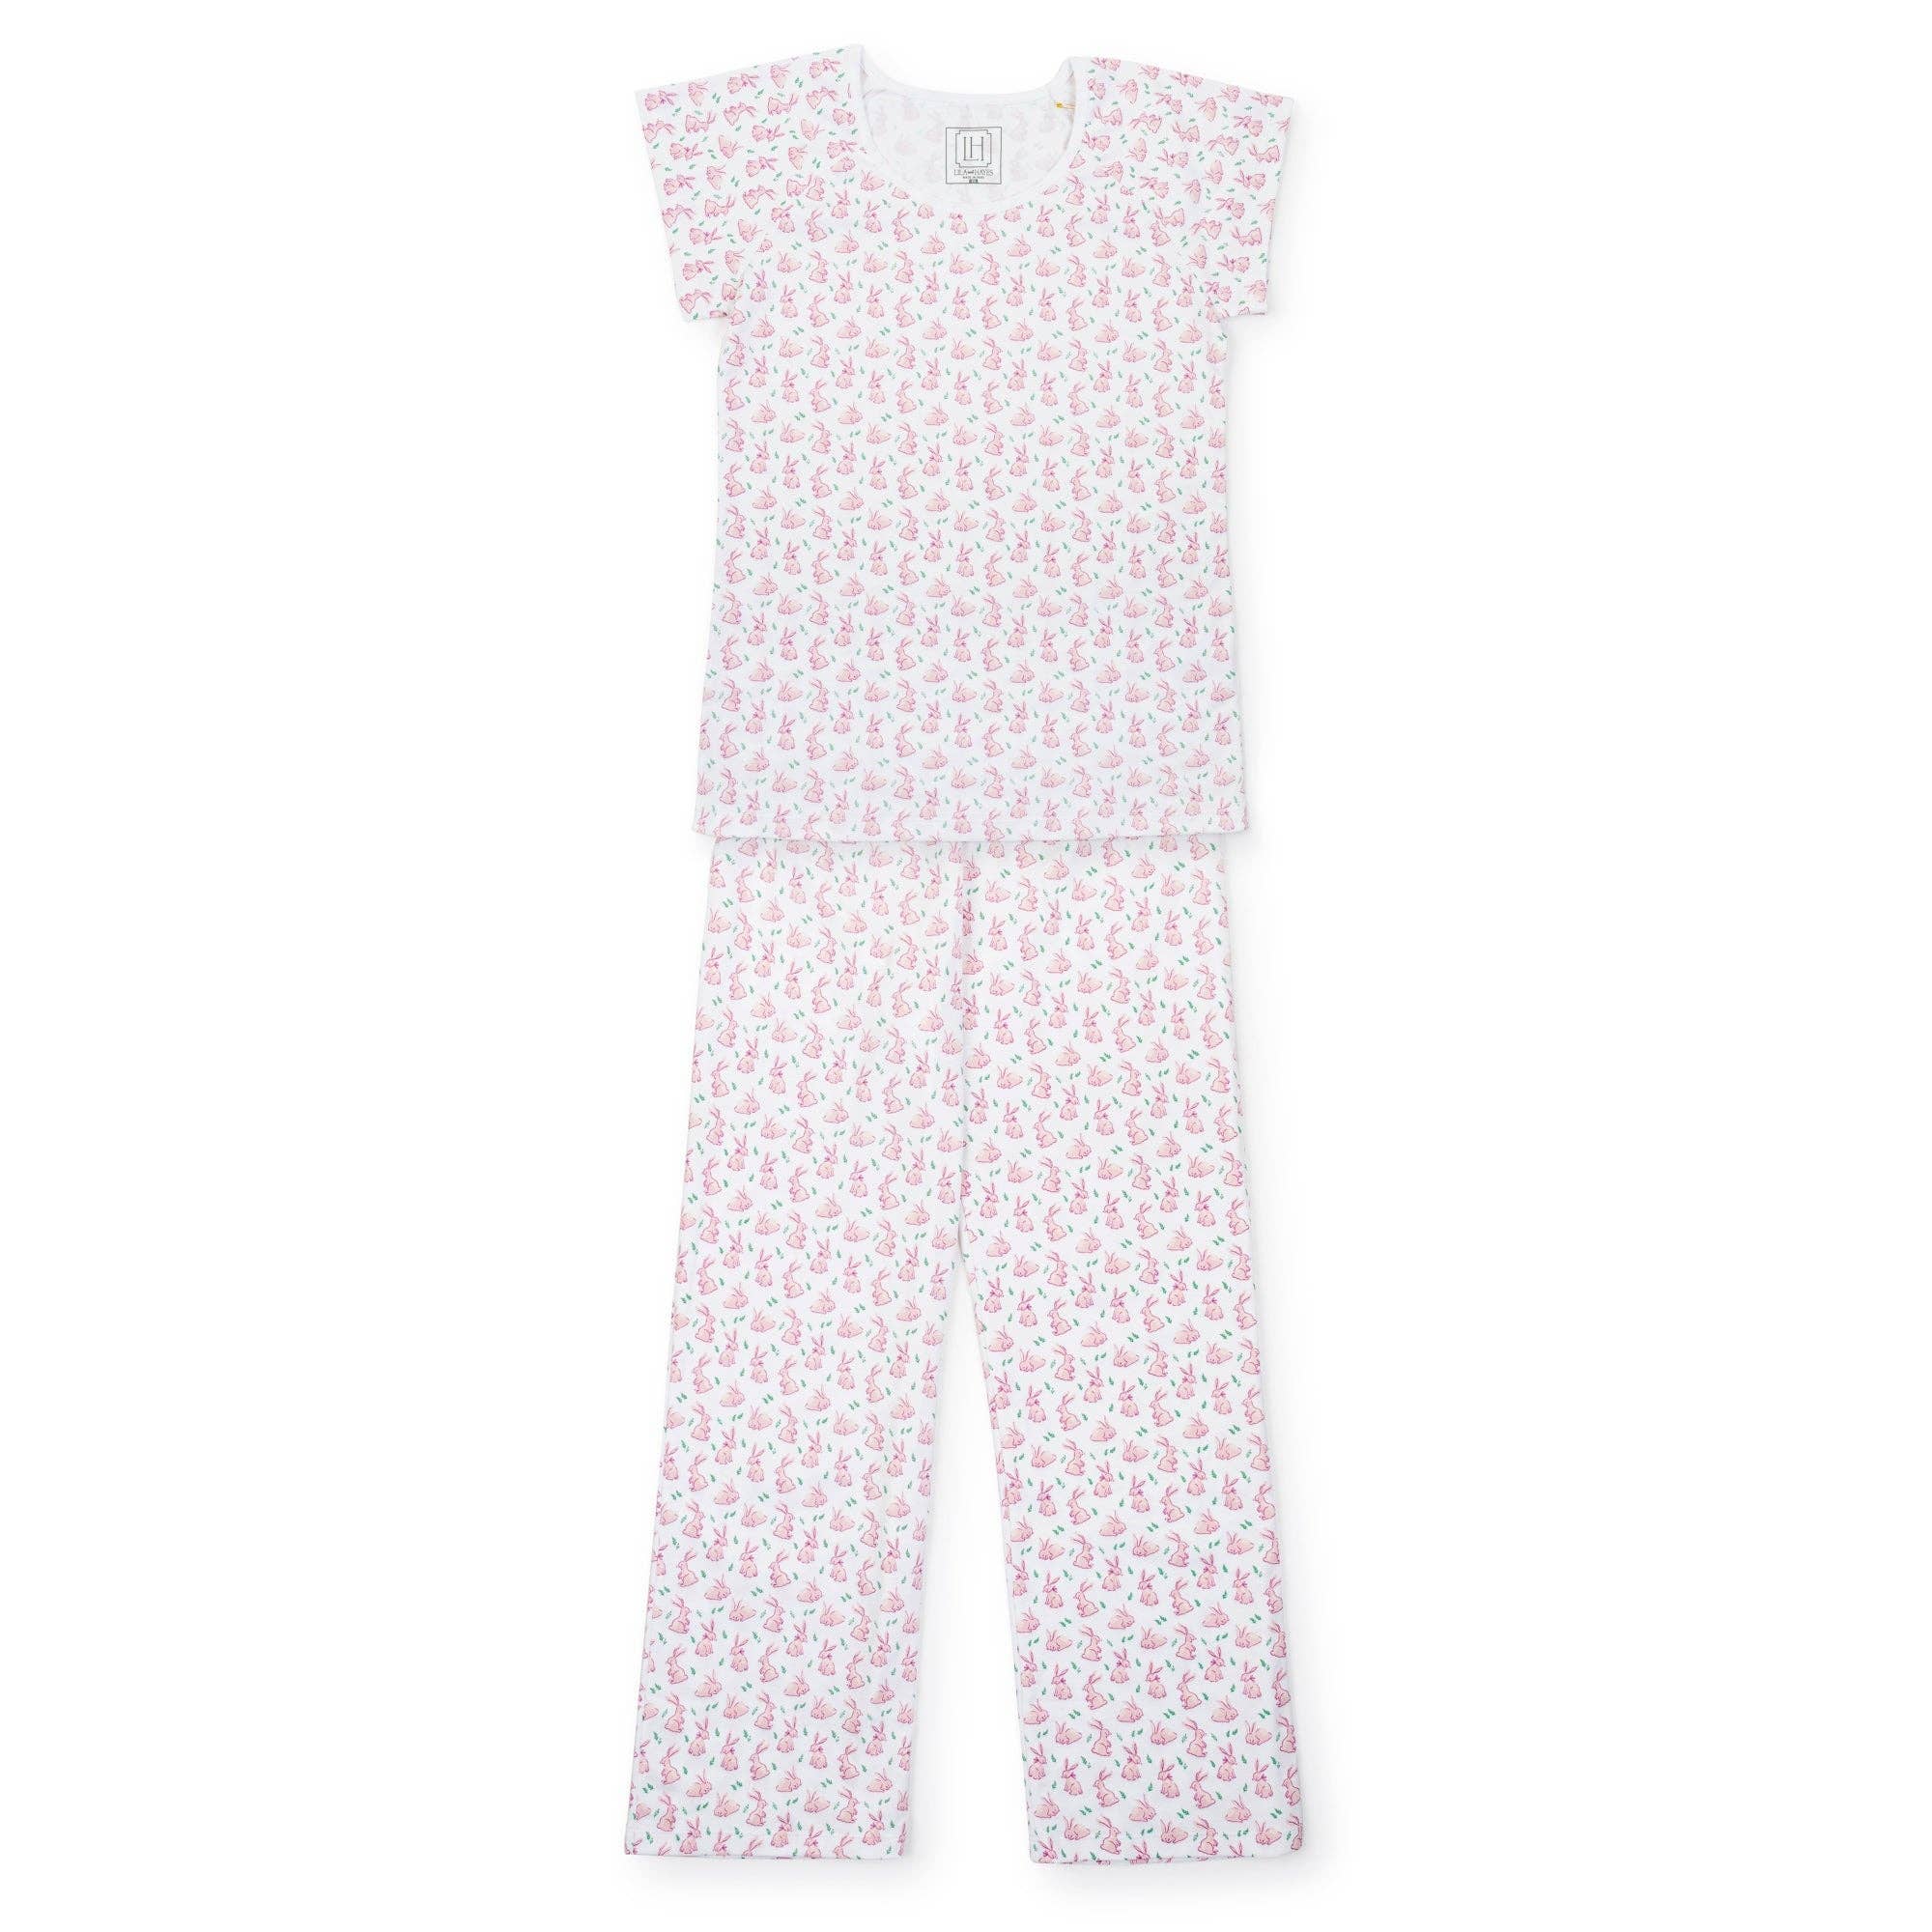 Mamie Women's Pima Cotton Pajama Pant Set - Bunny Hop Pink